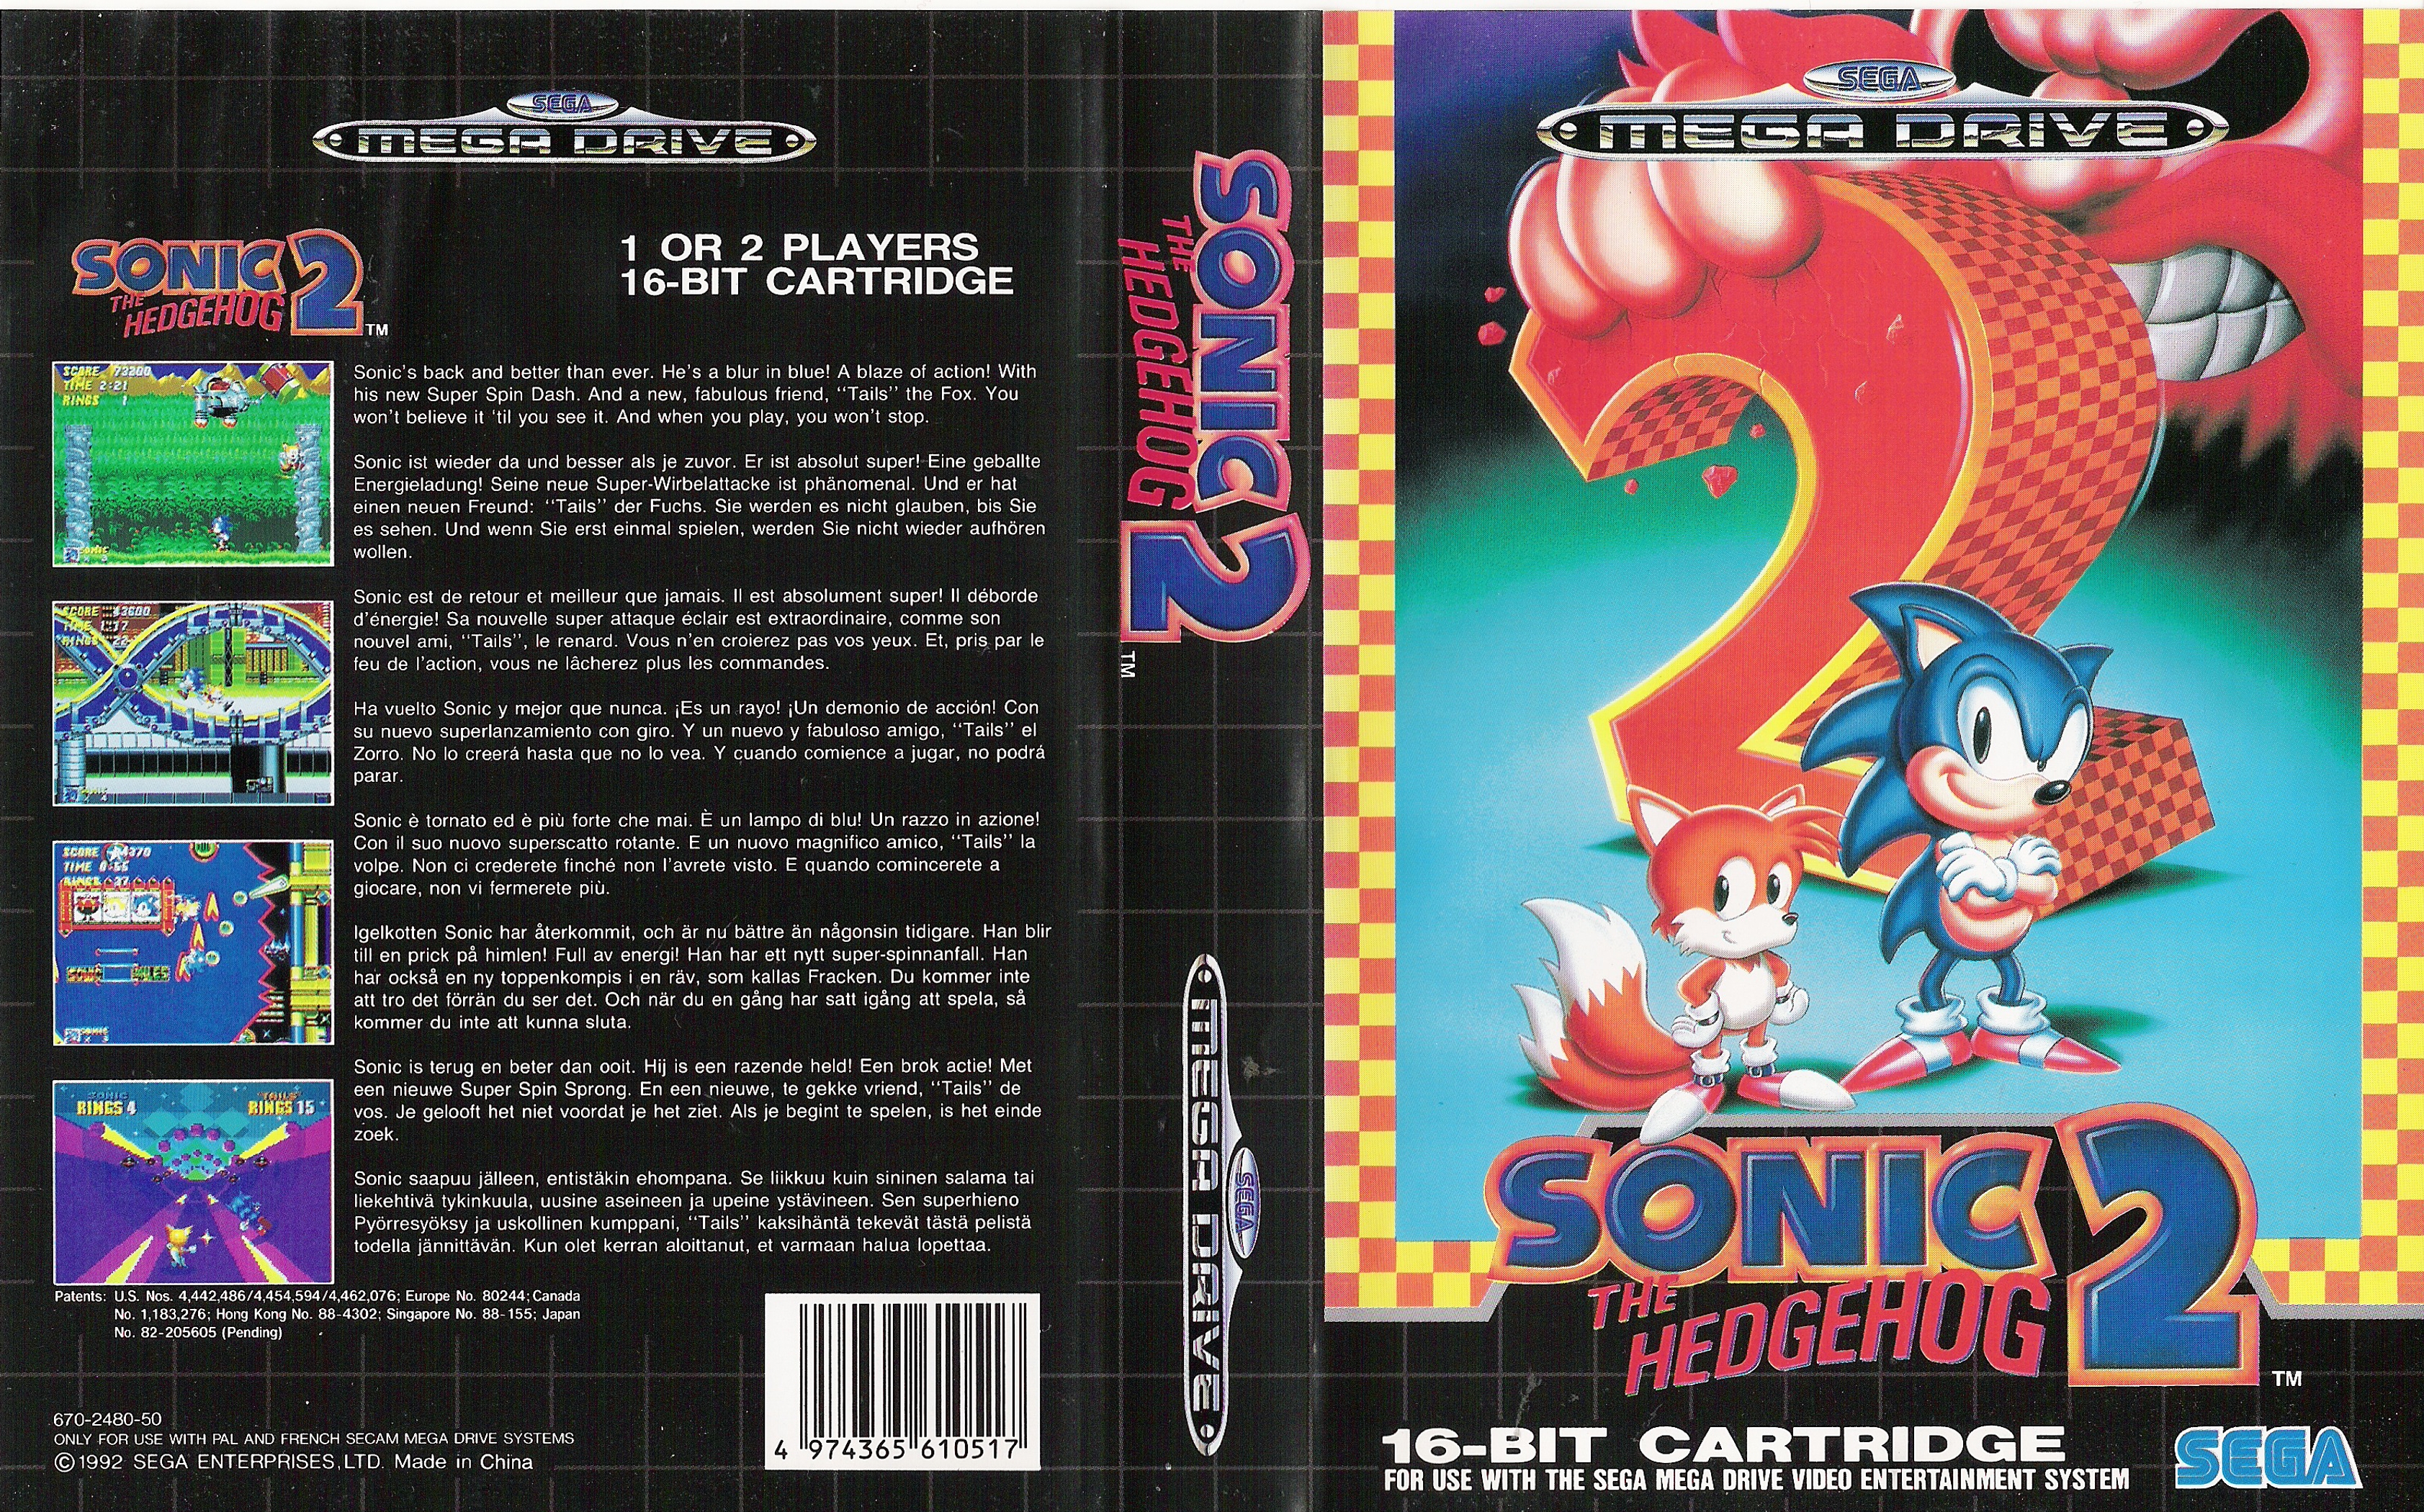 REVIEW: 'Sonic the Hedgehog 2' brings classic Sega video game